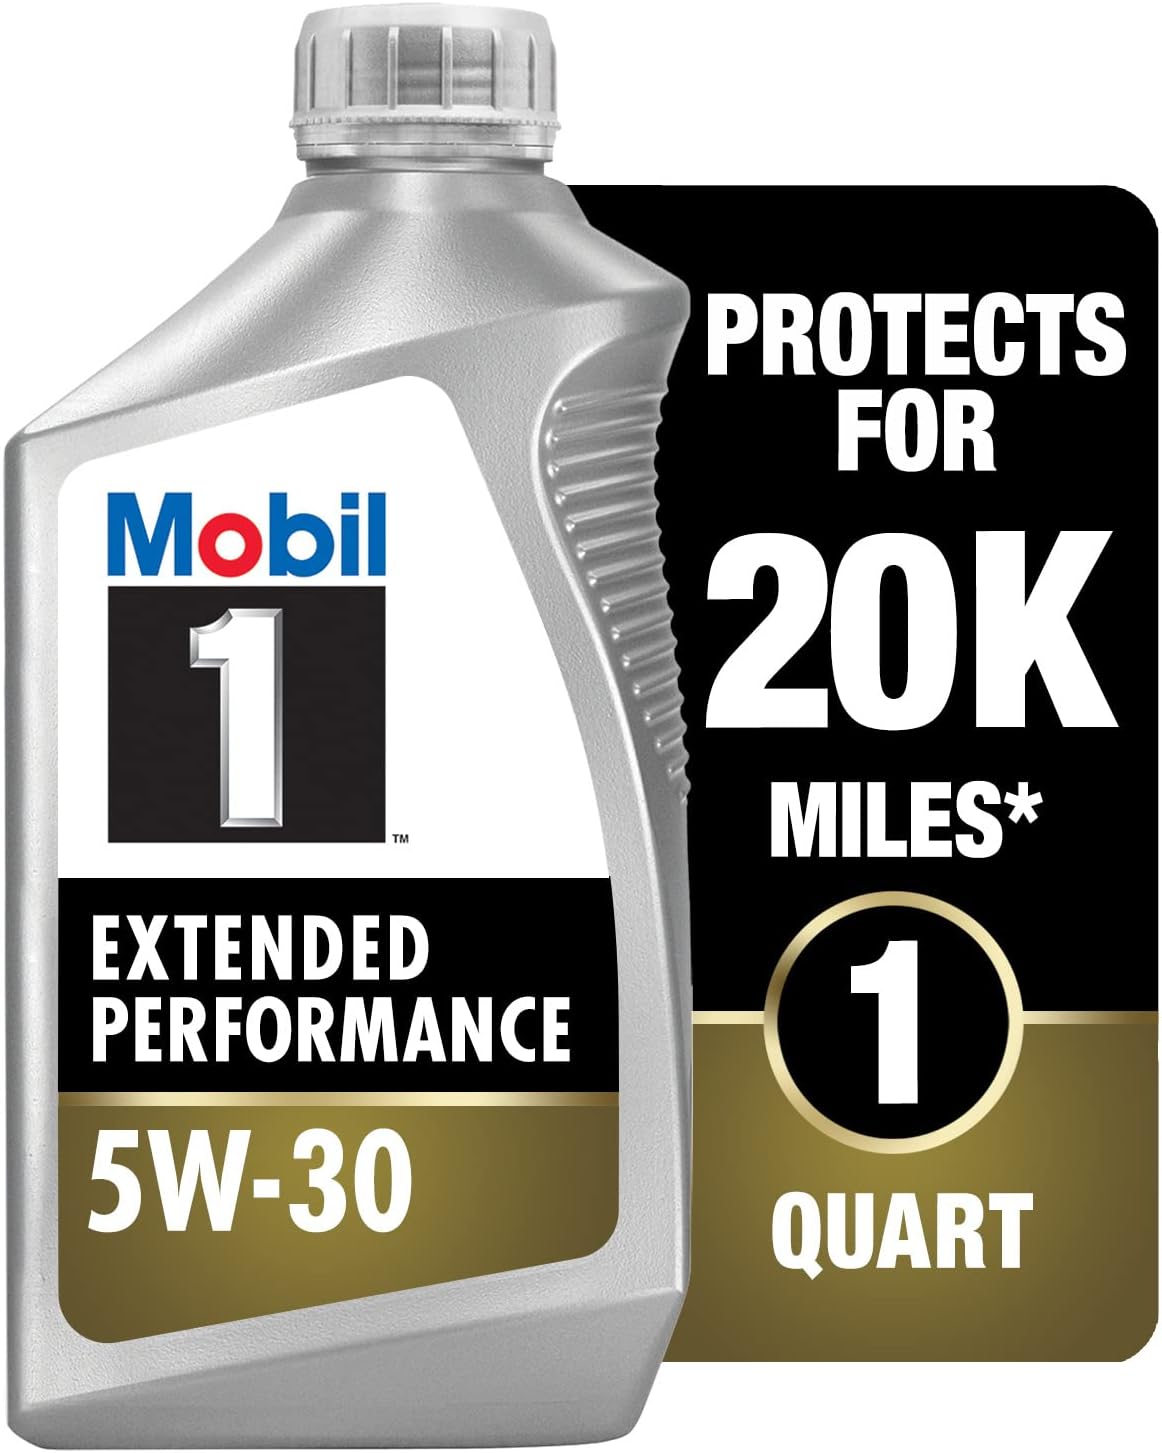 Mobil 1 Extended Performance Full Synthetic Motor Oil 5W-30, 6